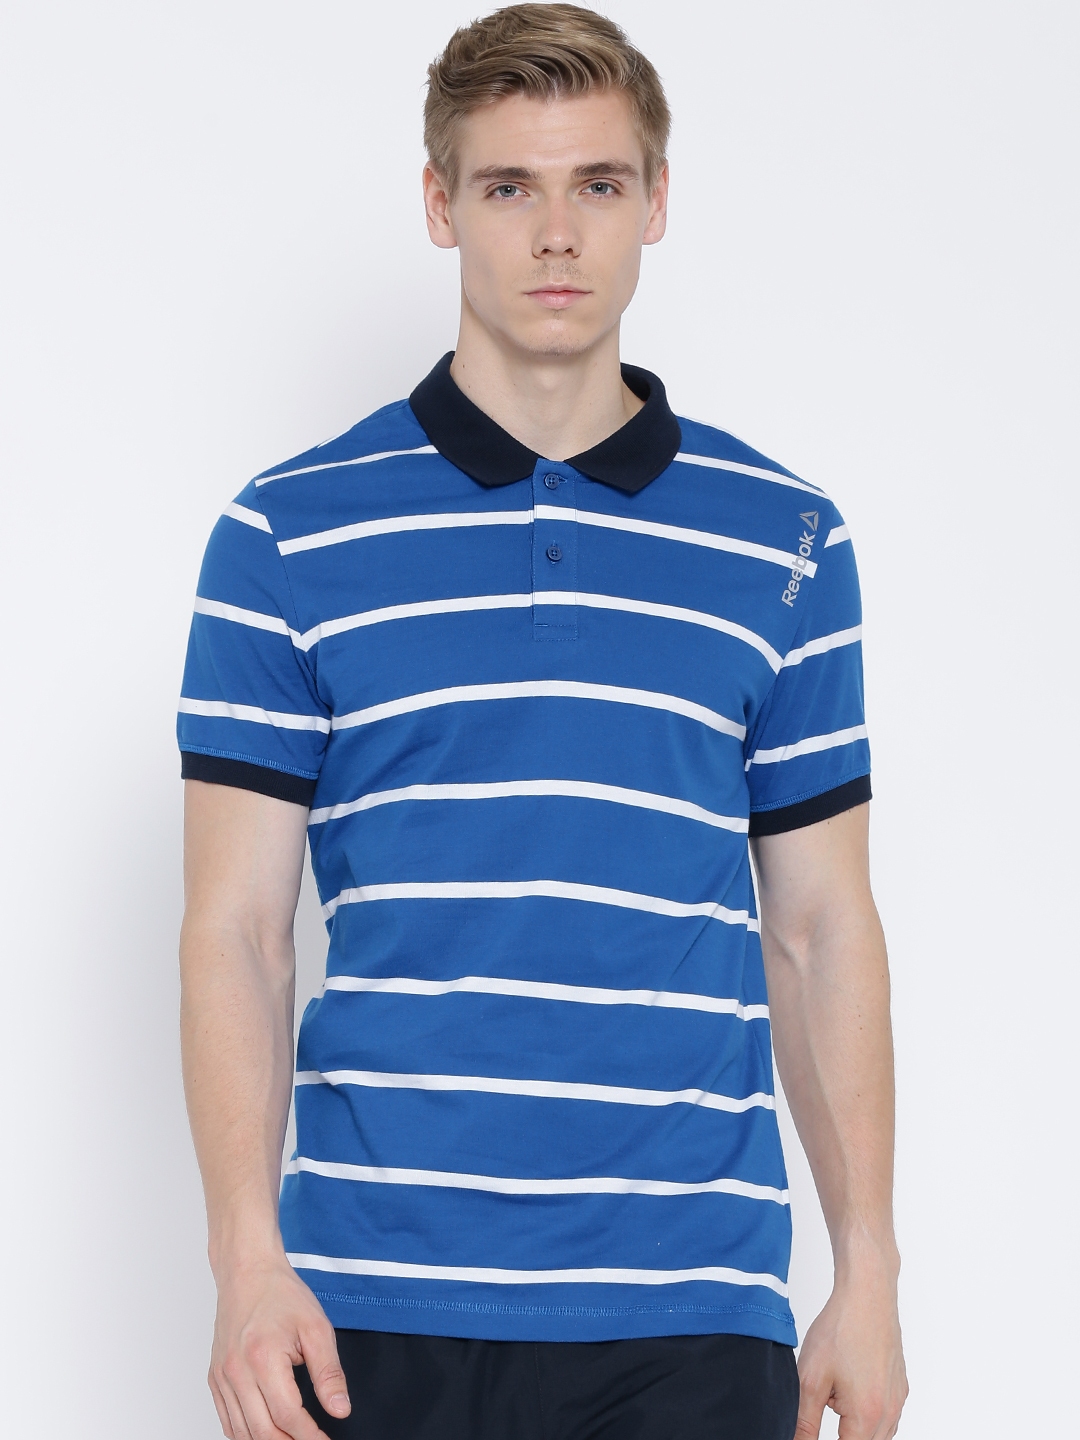 Buy Reebok Blue White Striped Training Polo Pure Cotton T Shirt ...